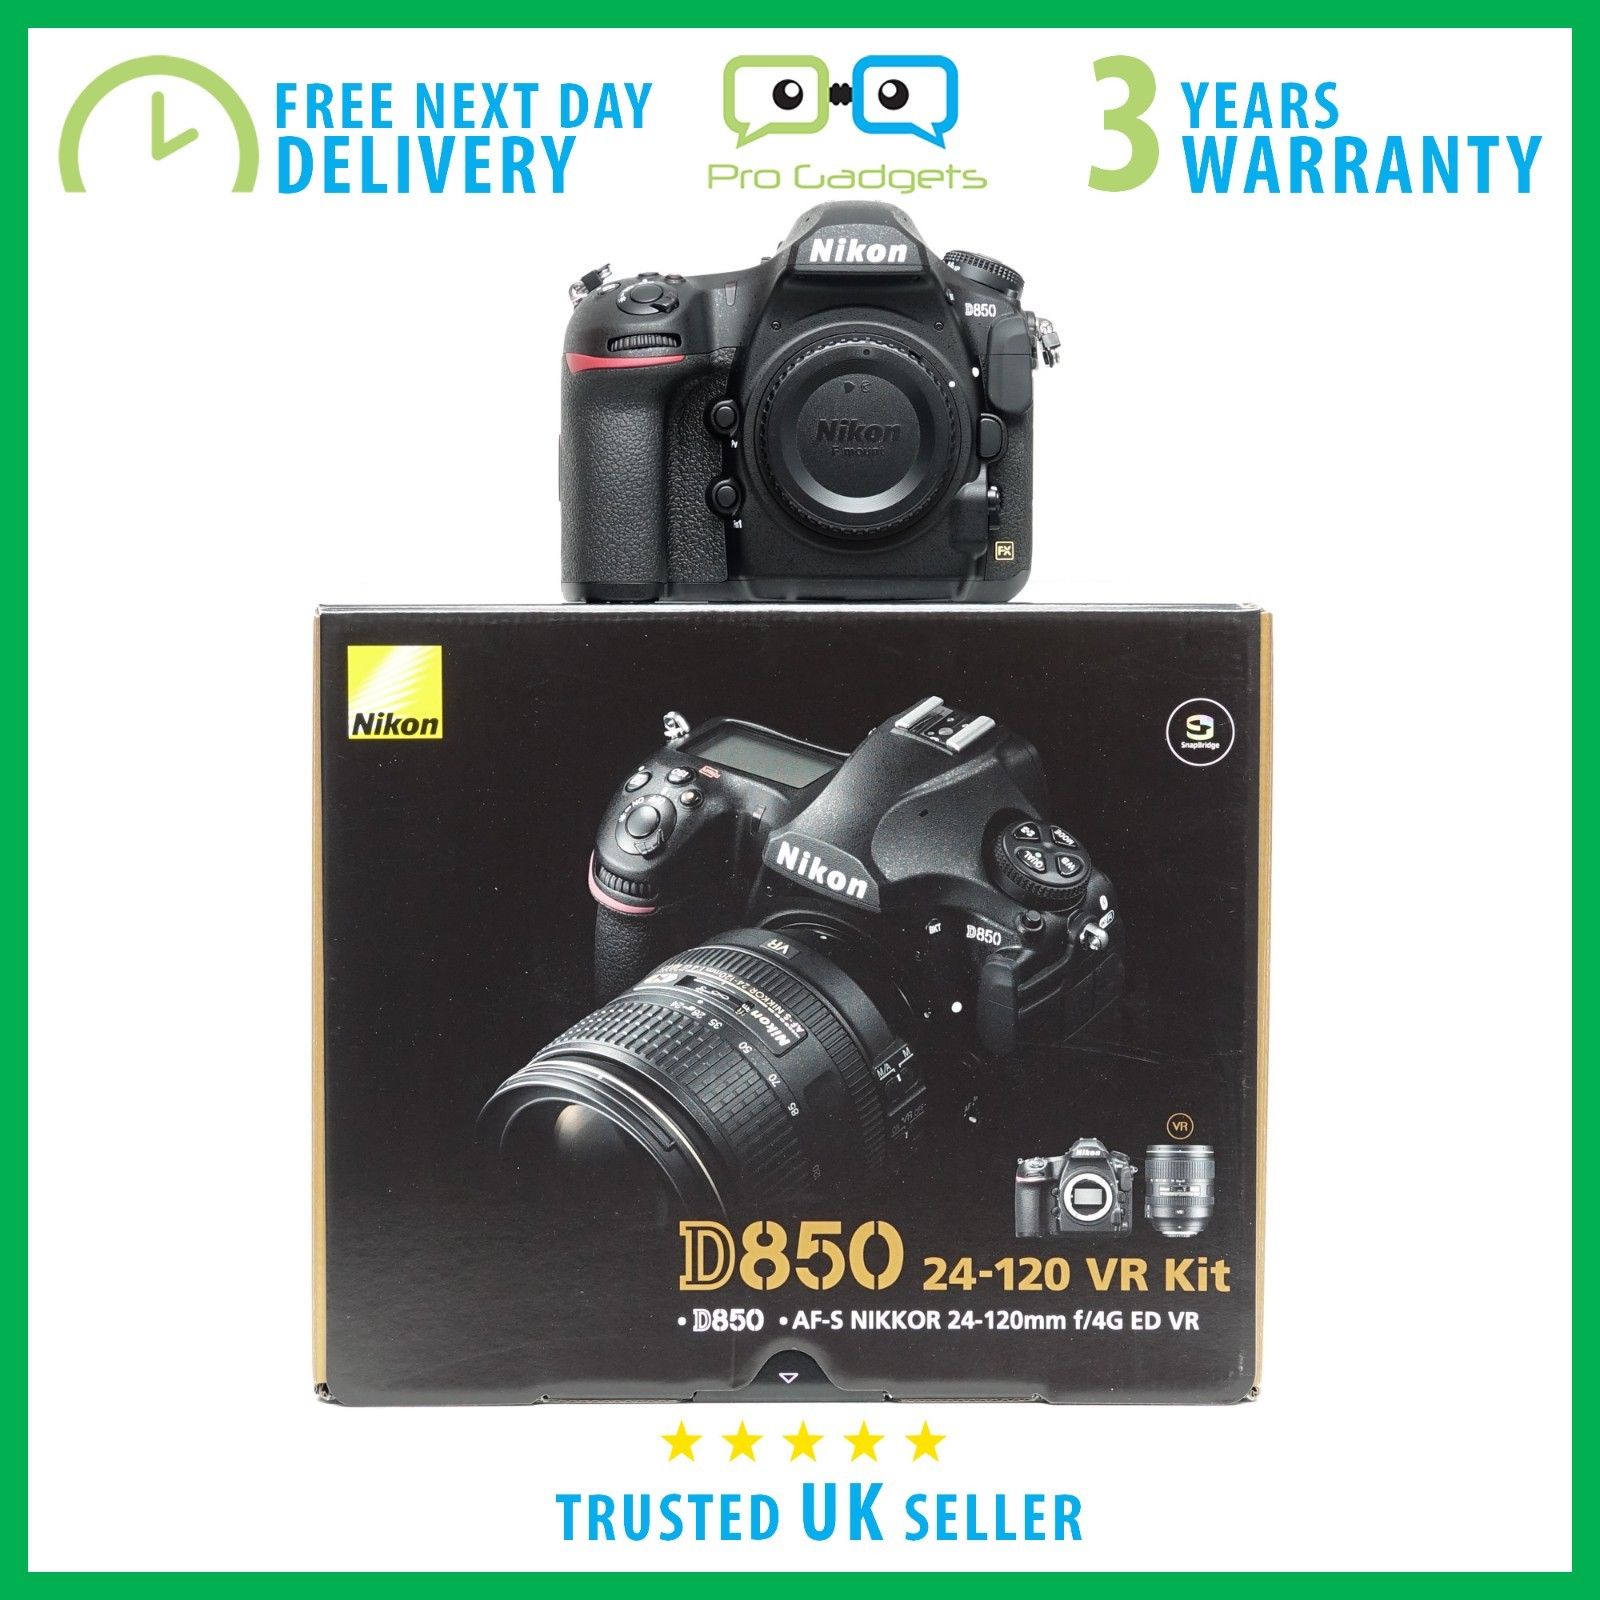 New Nikon D850 45.7MP FX CMOS Sensor 4K Video DSLR Kit Box - 3 Year Warranty